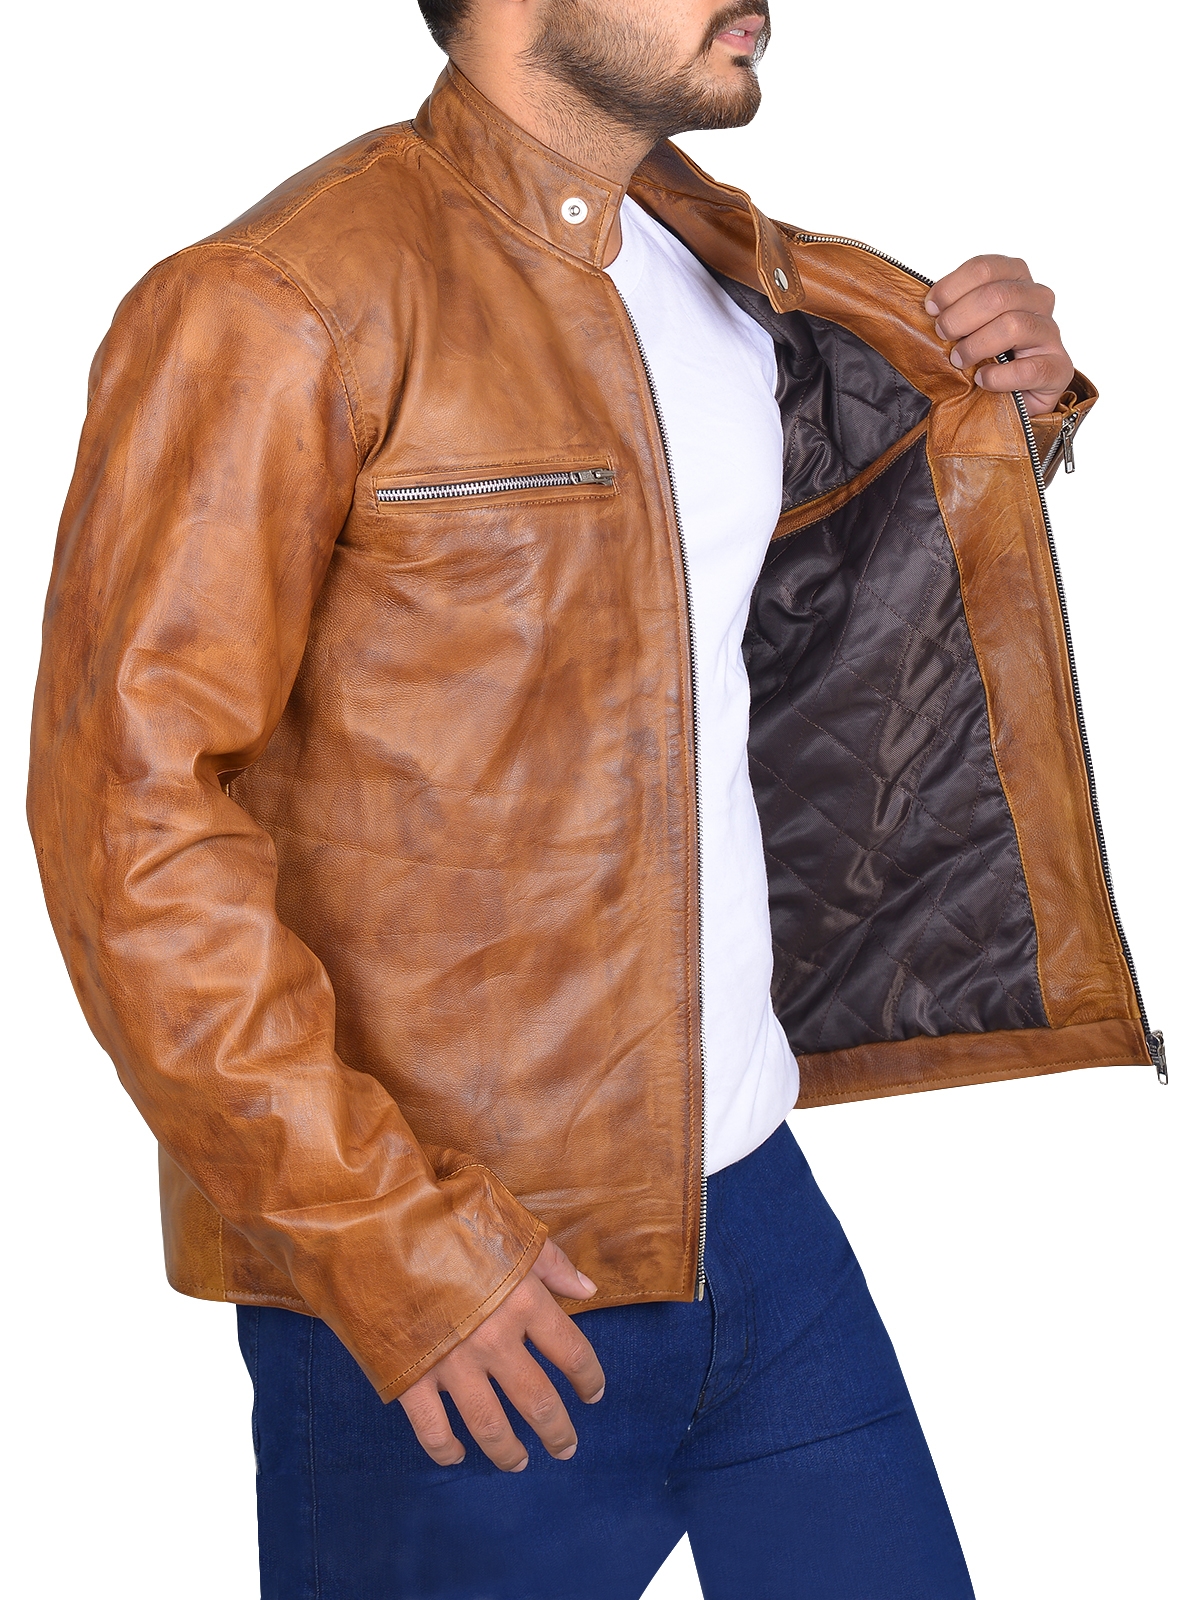 The Jacket Maker Distressed Leather Fur Coat